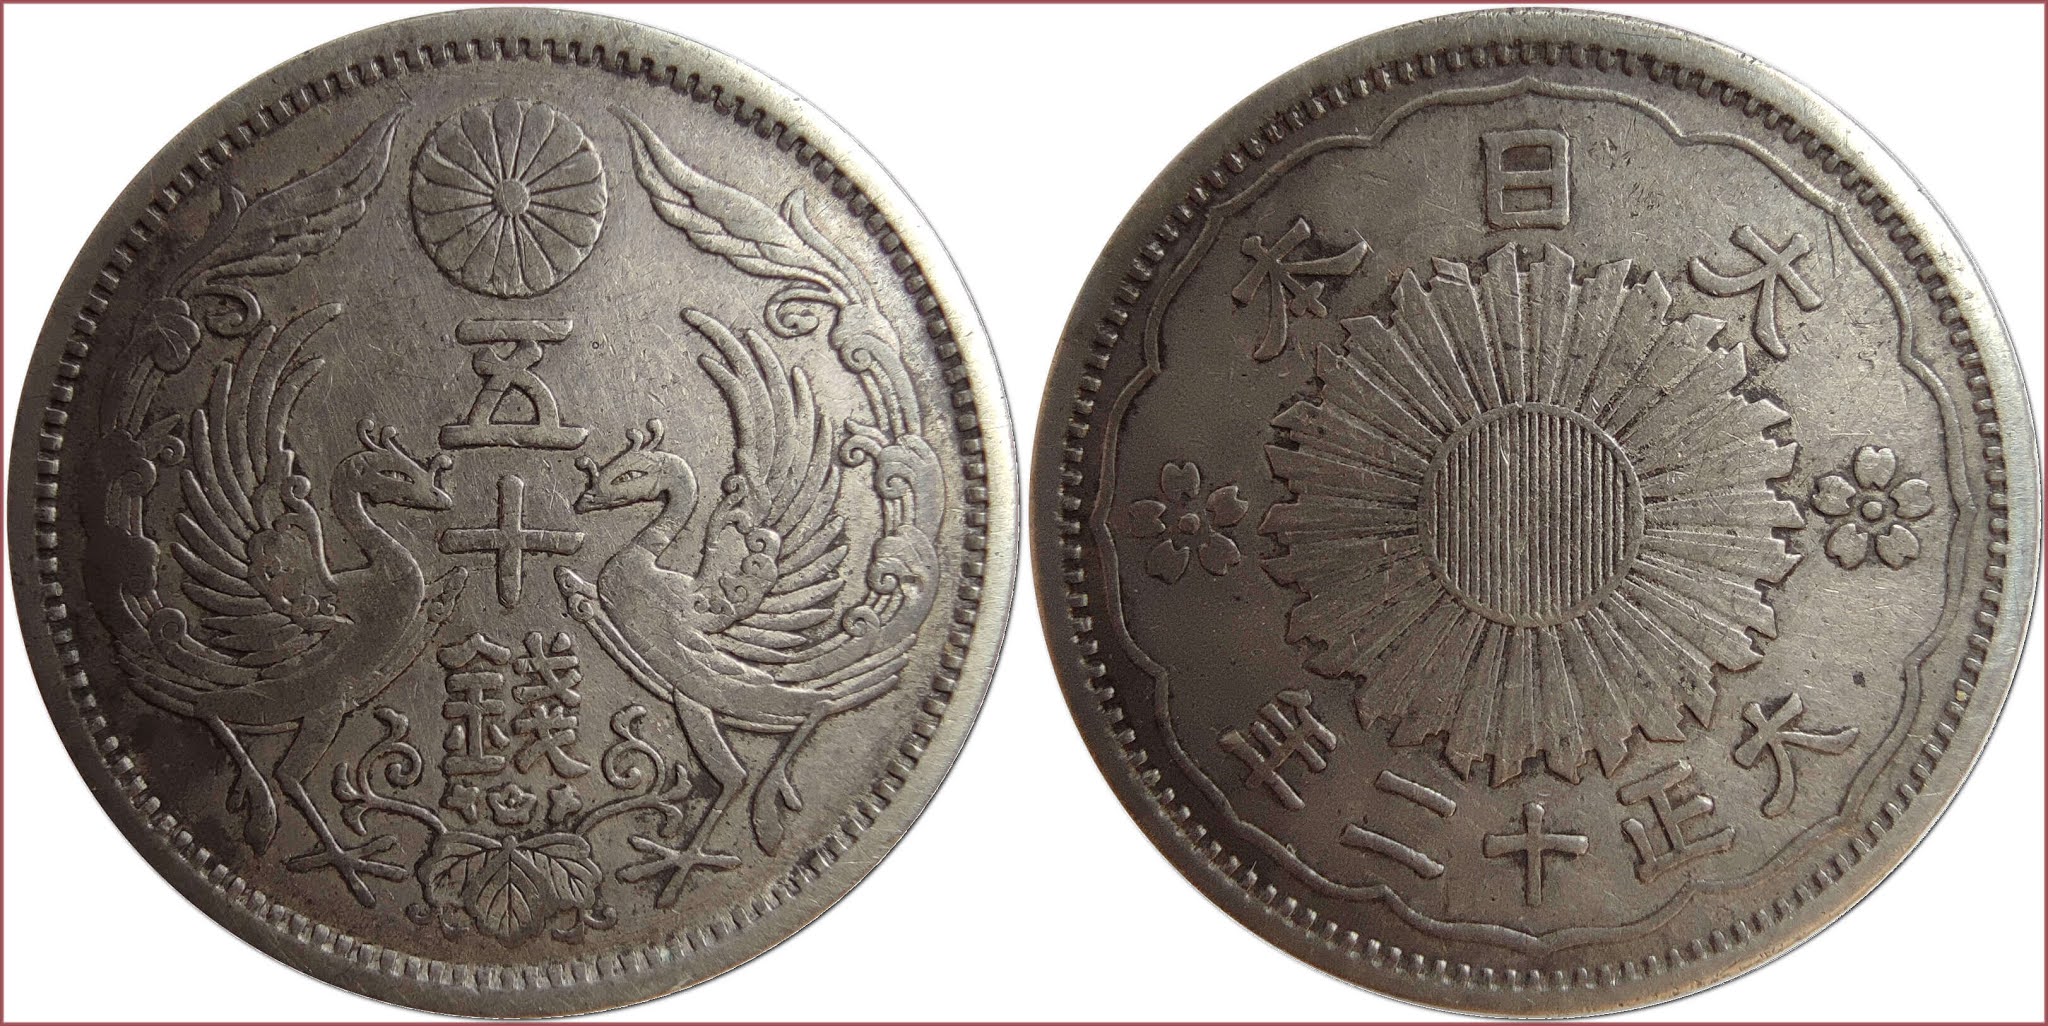 Japan 10 Sen Coin 1926 Japanese Taisho Emperor Year 15 